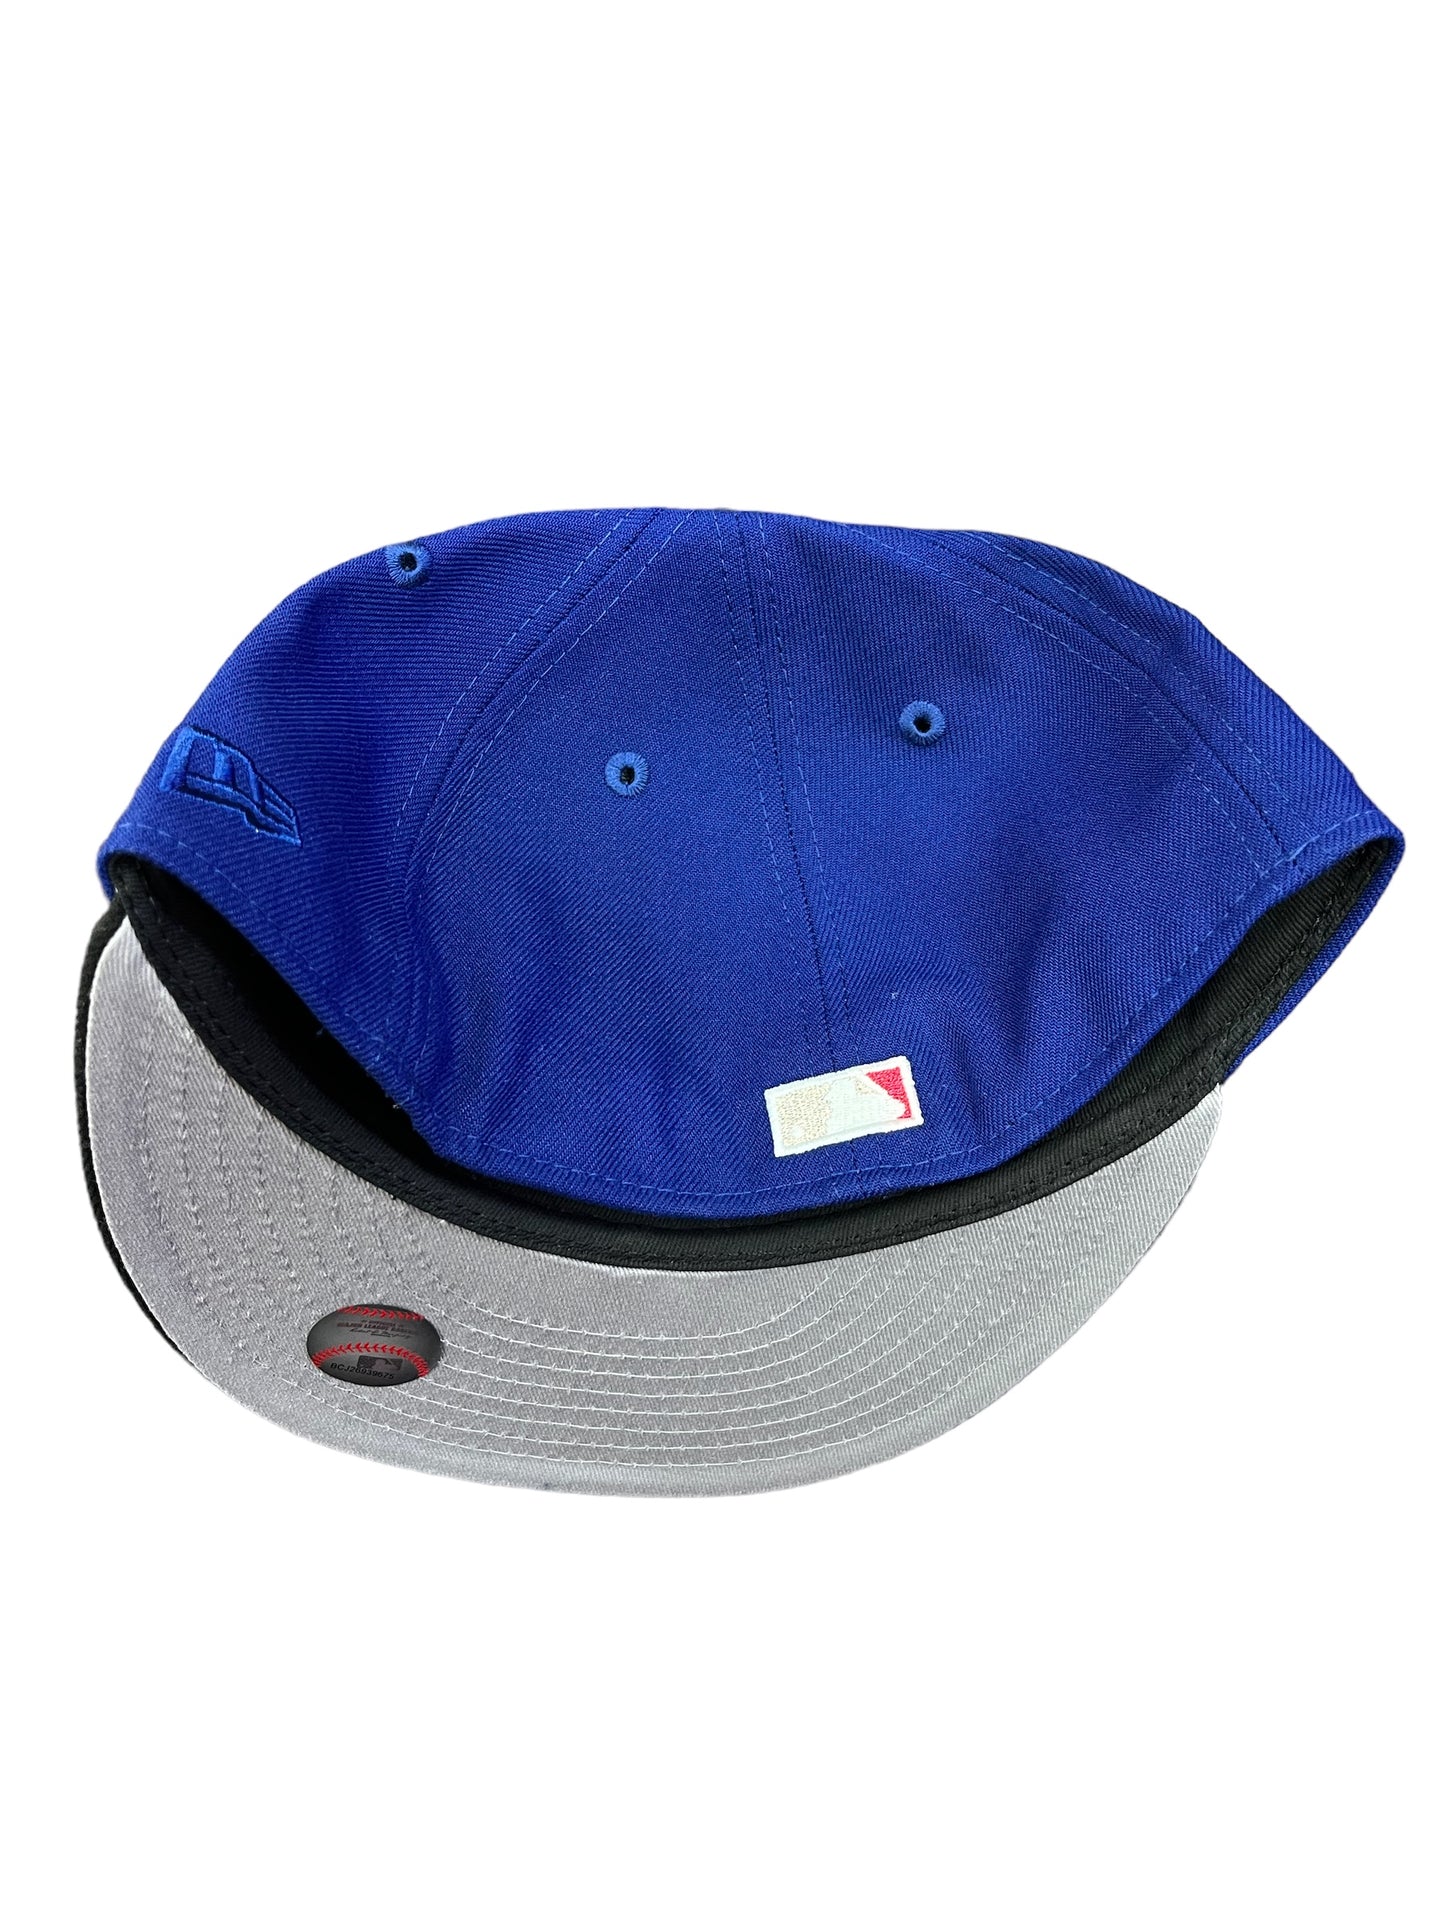 Houston Astros “Blue / Black” Hat